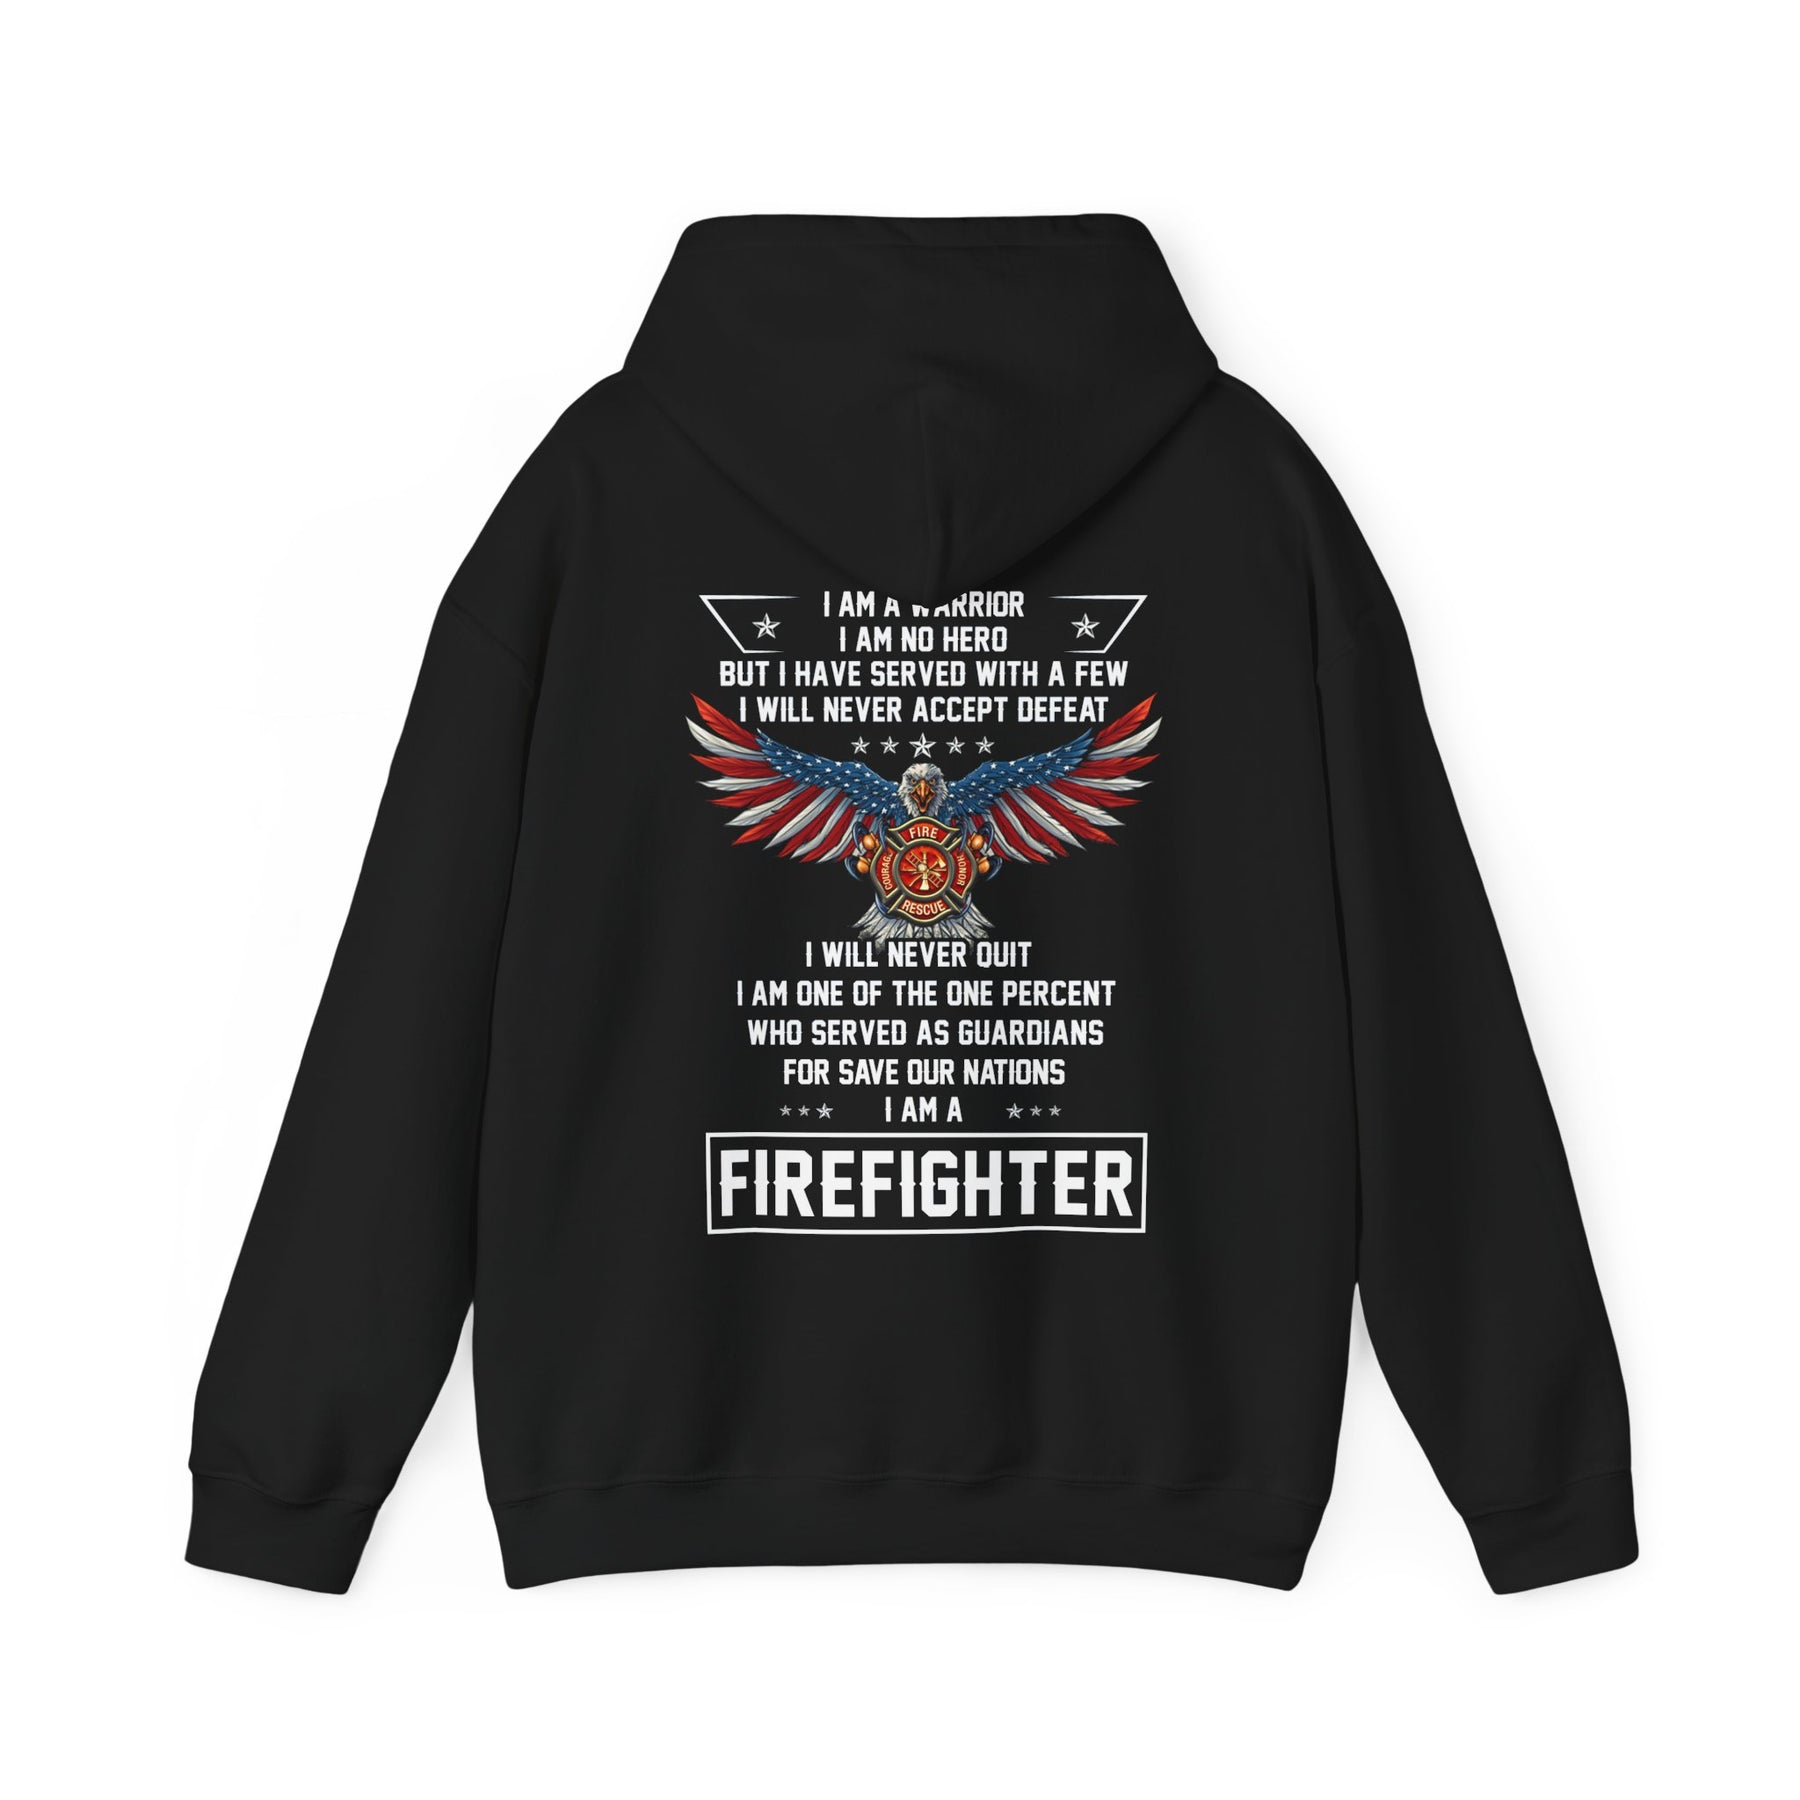 Firefighter Hoodies / Proud Firefighter Hoodies